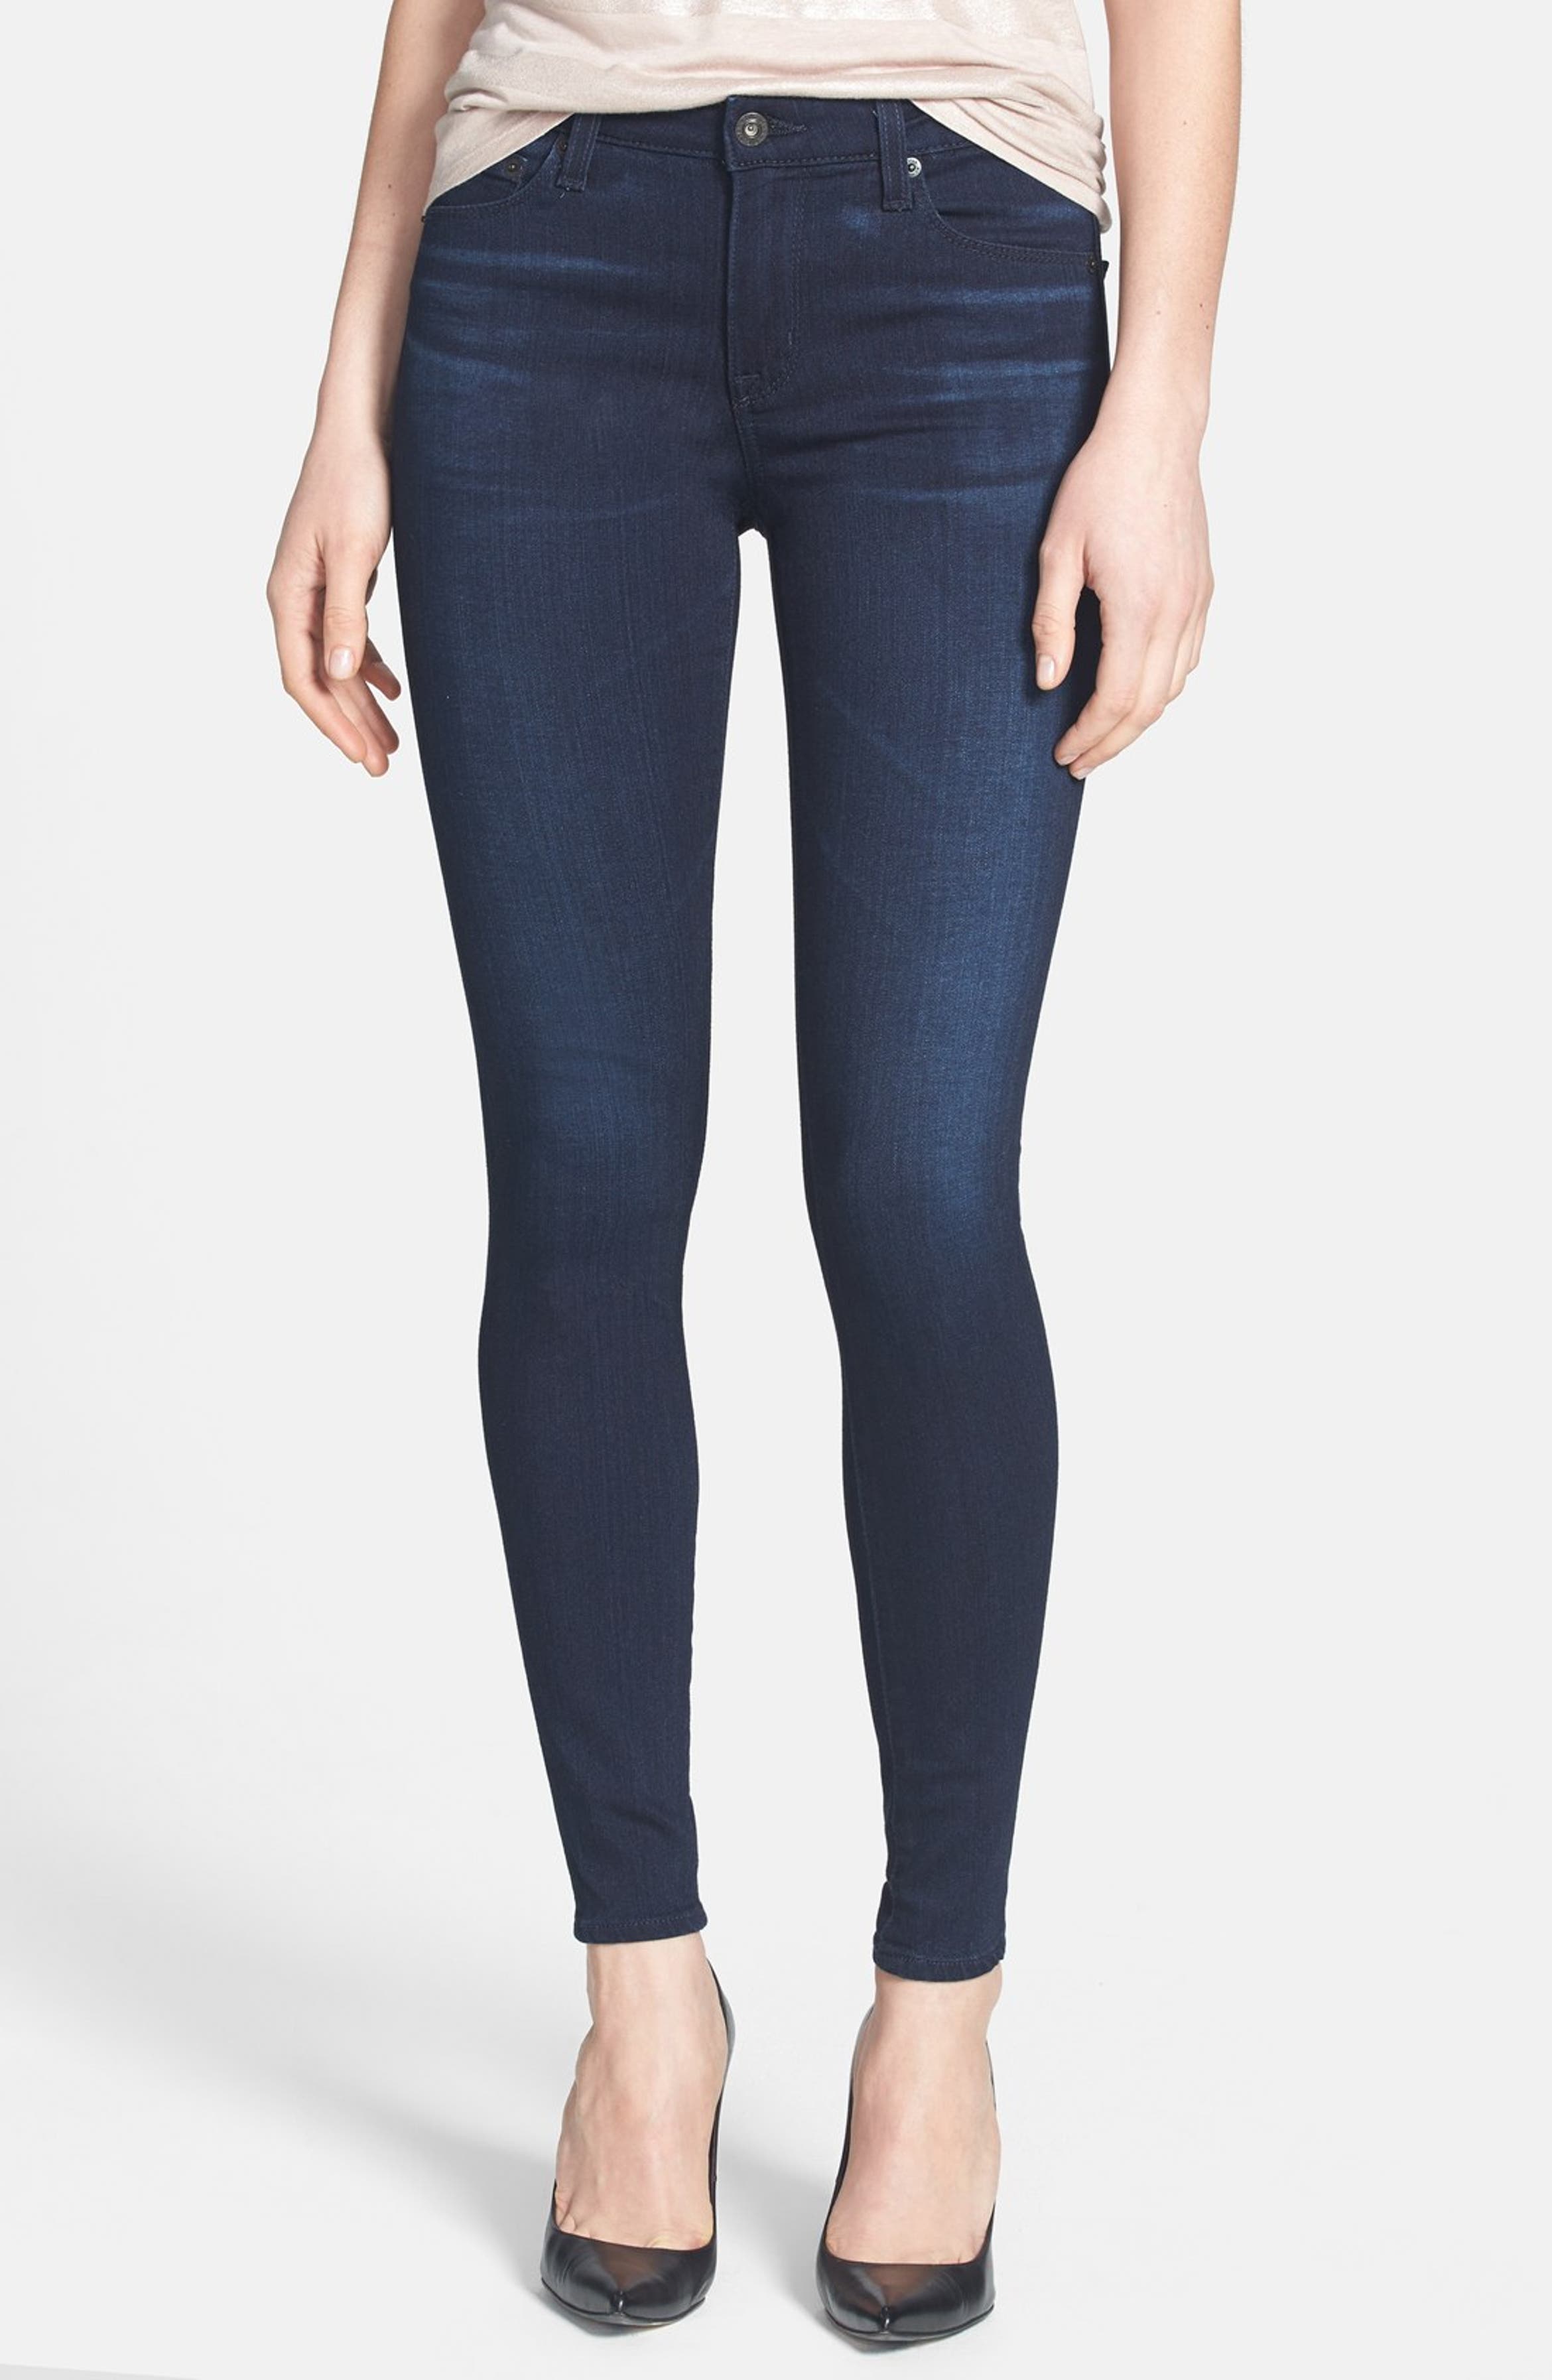 Big Star 'Ava' Jeans Super Skinny Stretch Jeans (Harmony Dark) (Petite ...